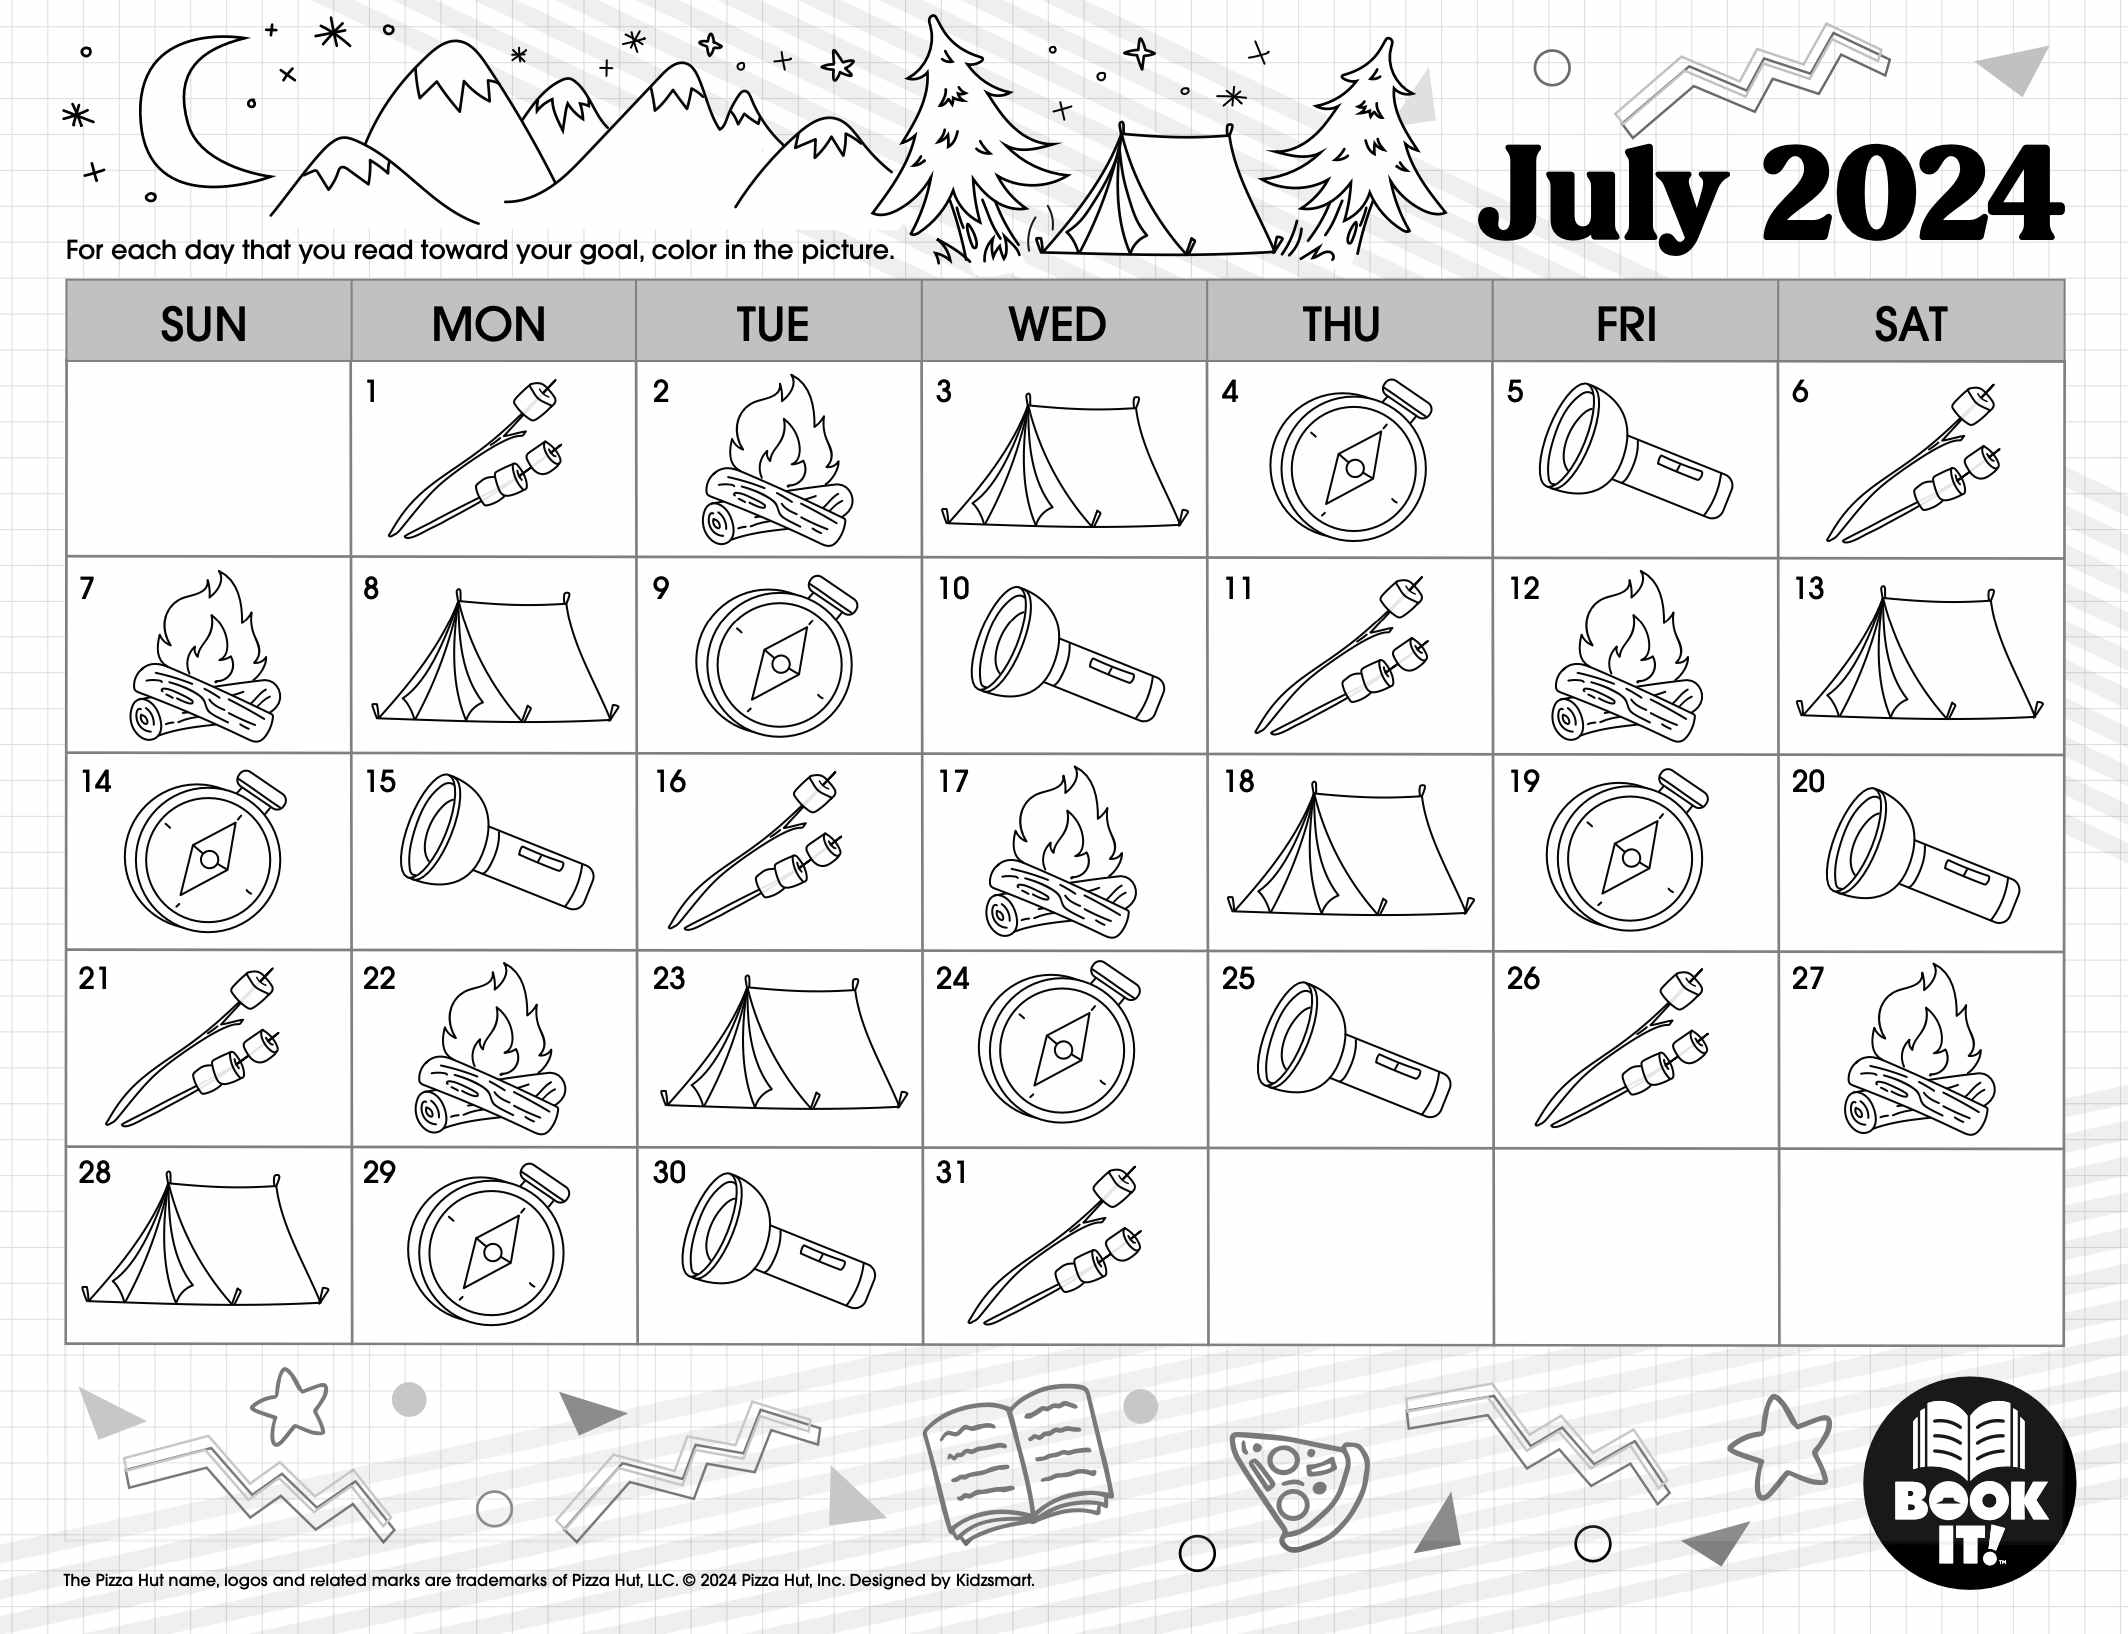 pizza hut bookit calendar july 2024